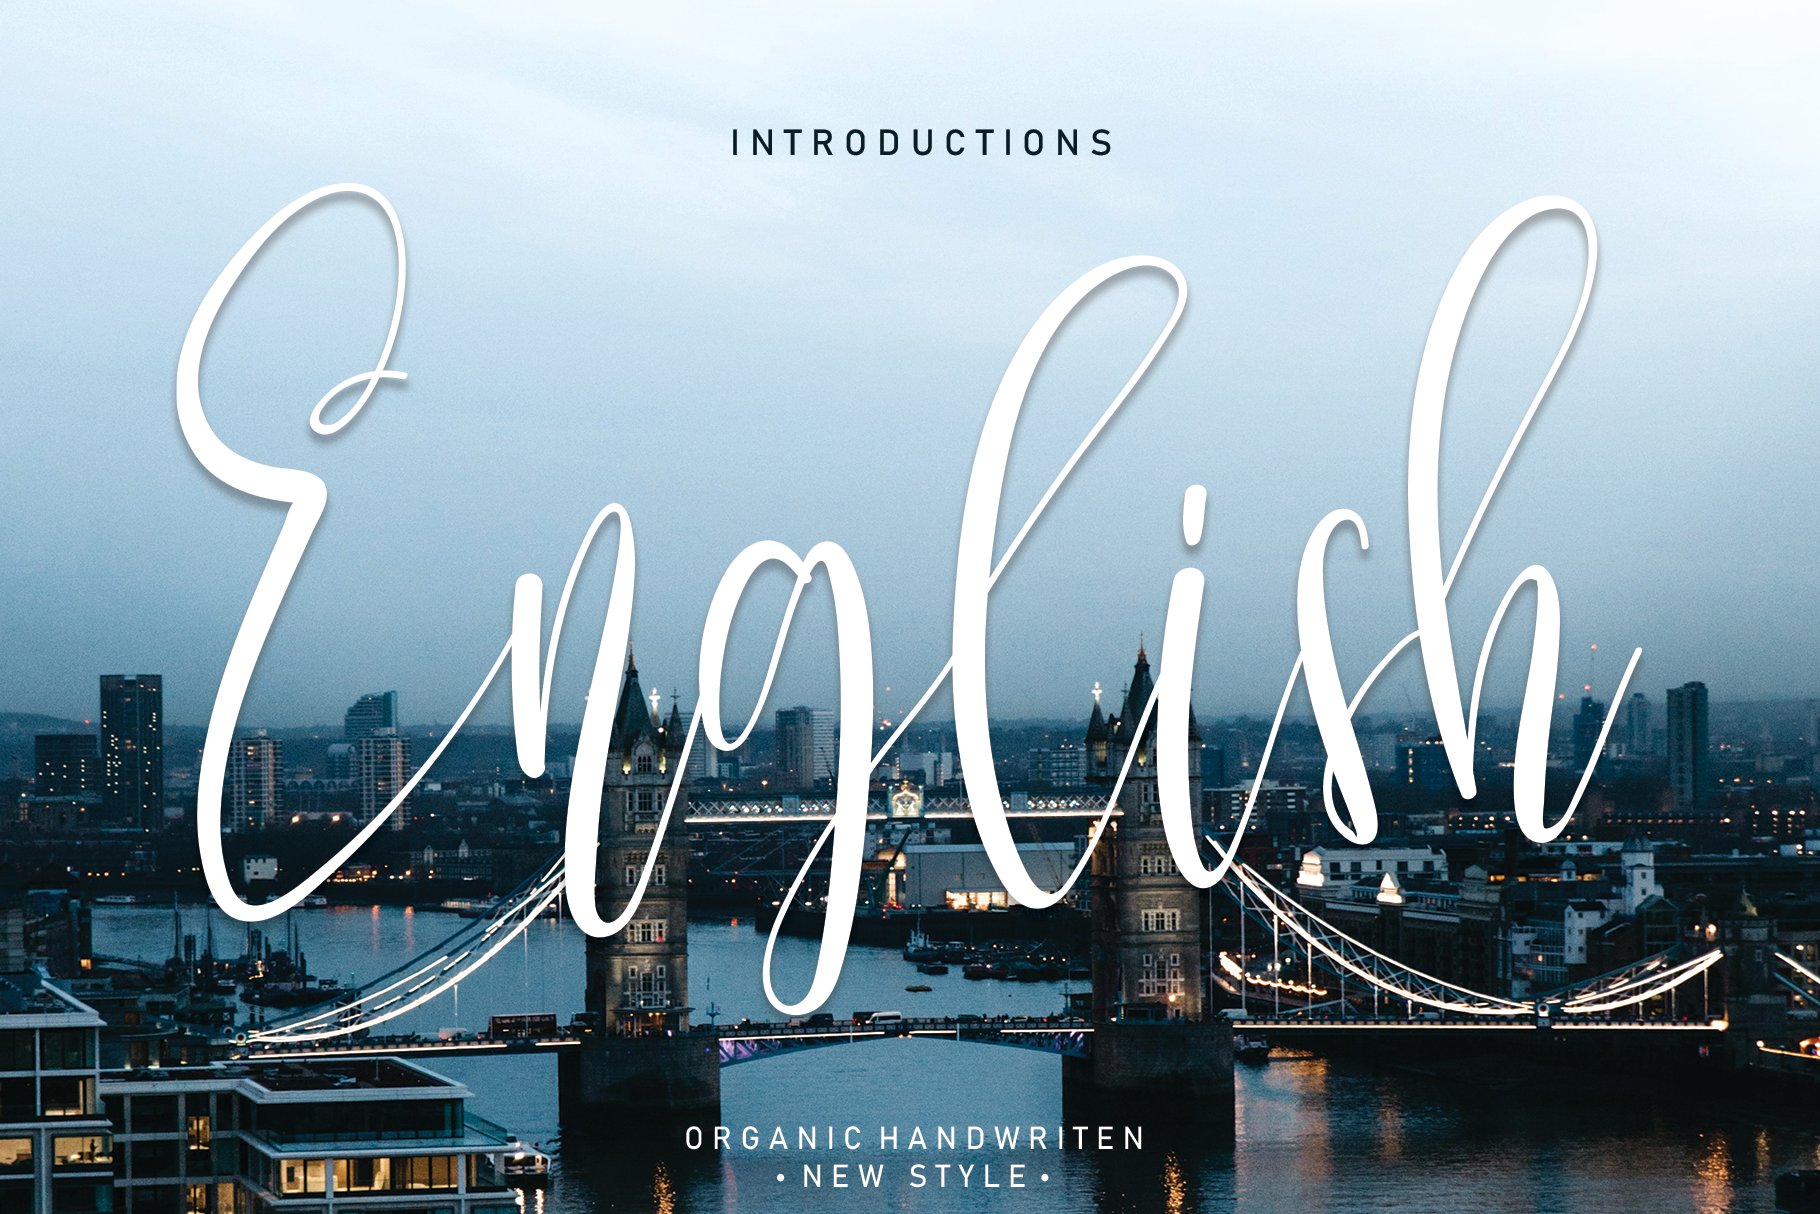 English | Script font cover image.